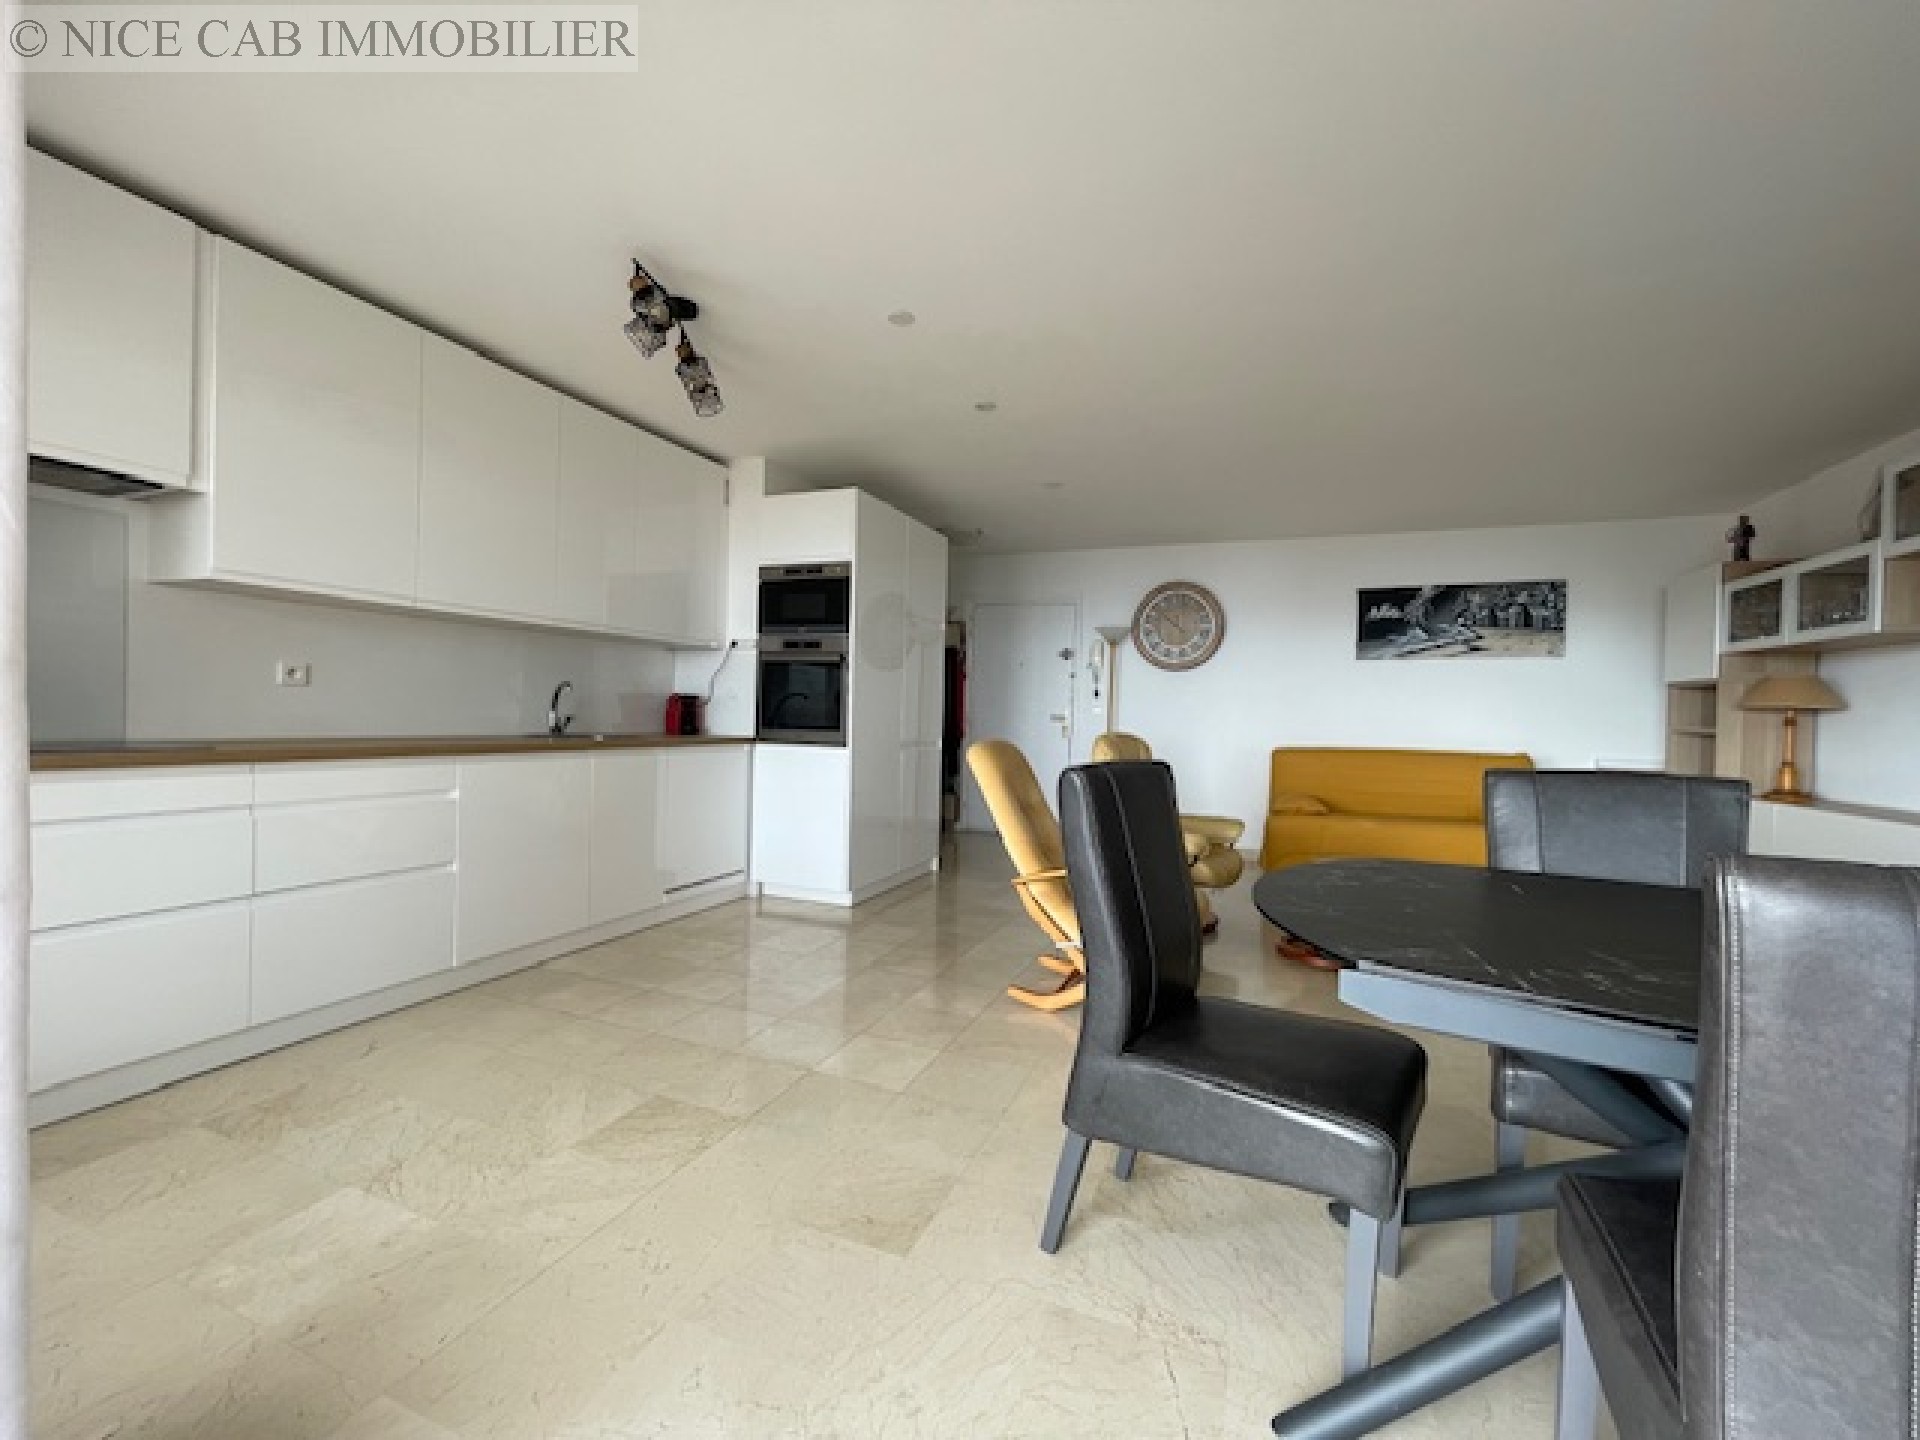 Appartement à vendre, ROQUEBRUNE CAP MARTIN, 54,6 m², 2 pièces